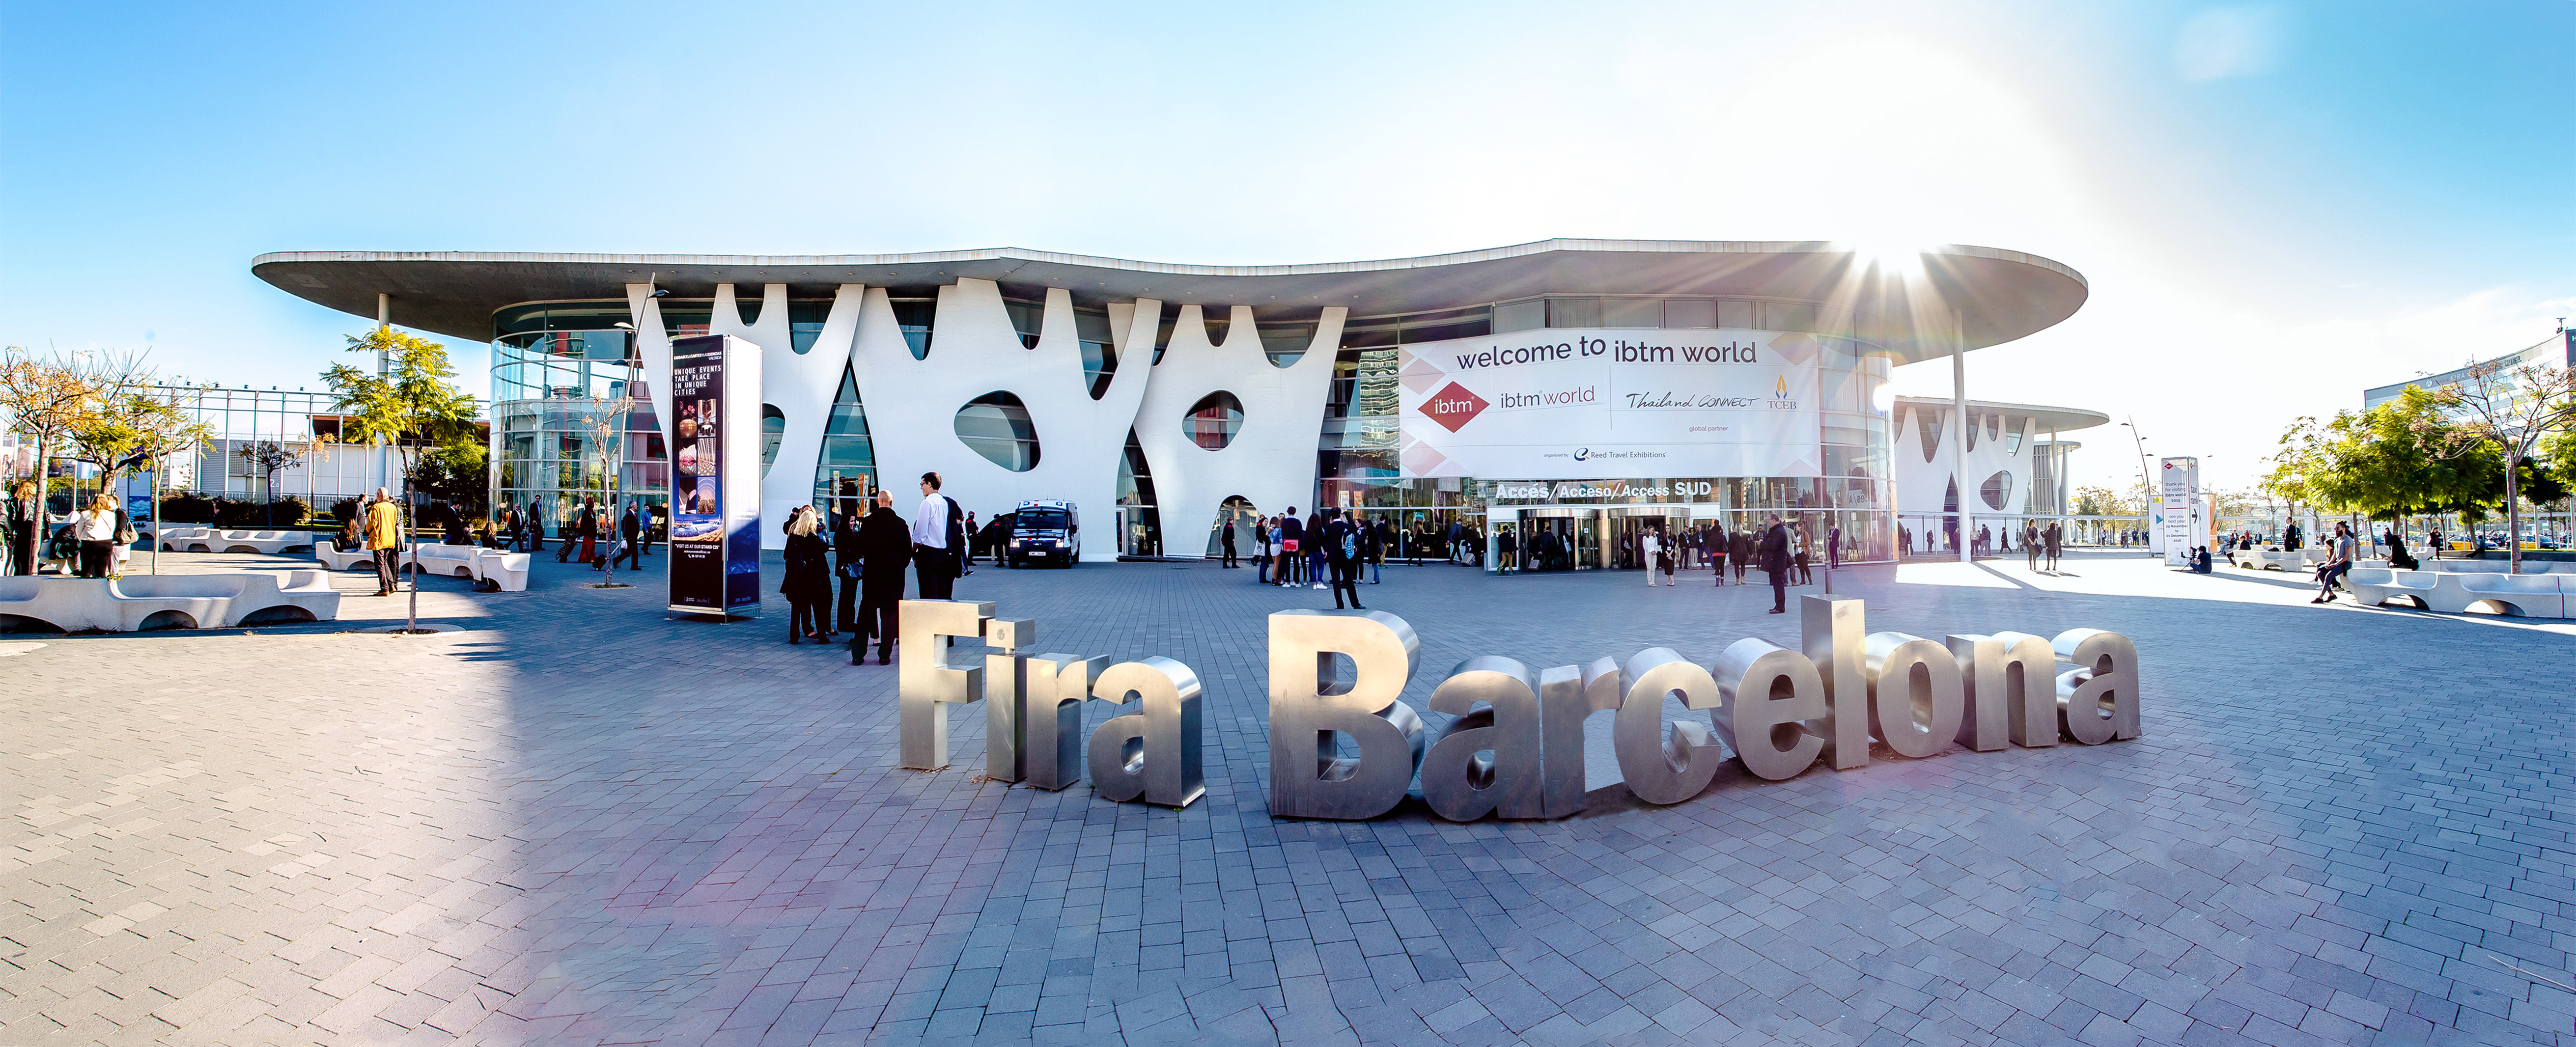 De passeig per l'IBTM World de Barcelona